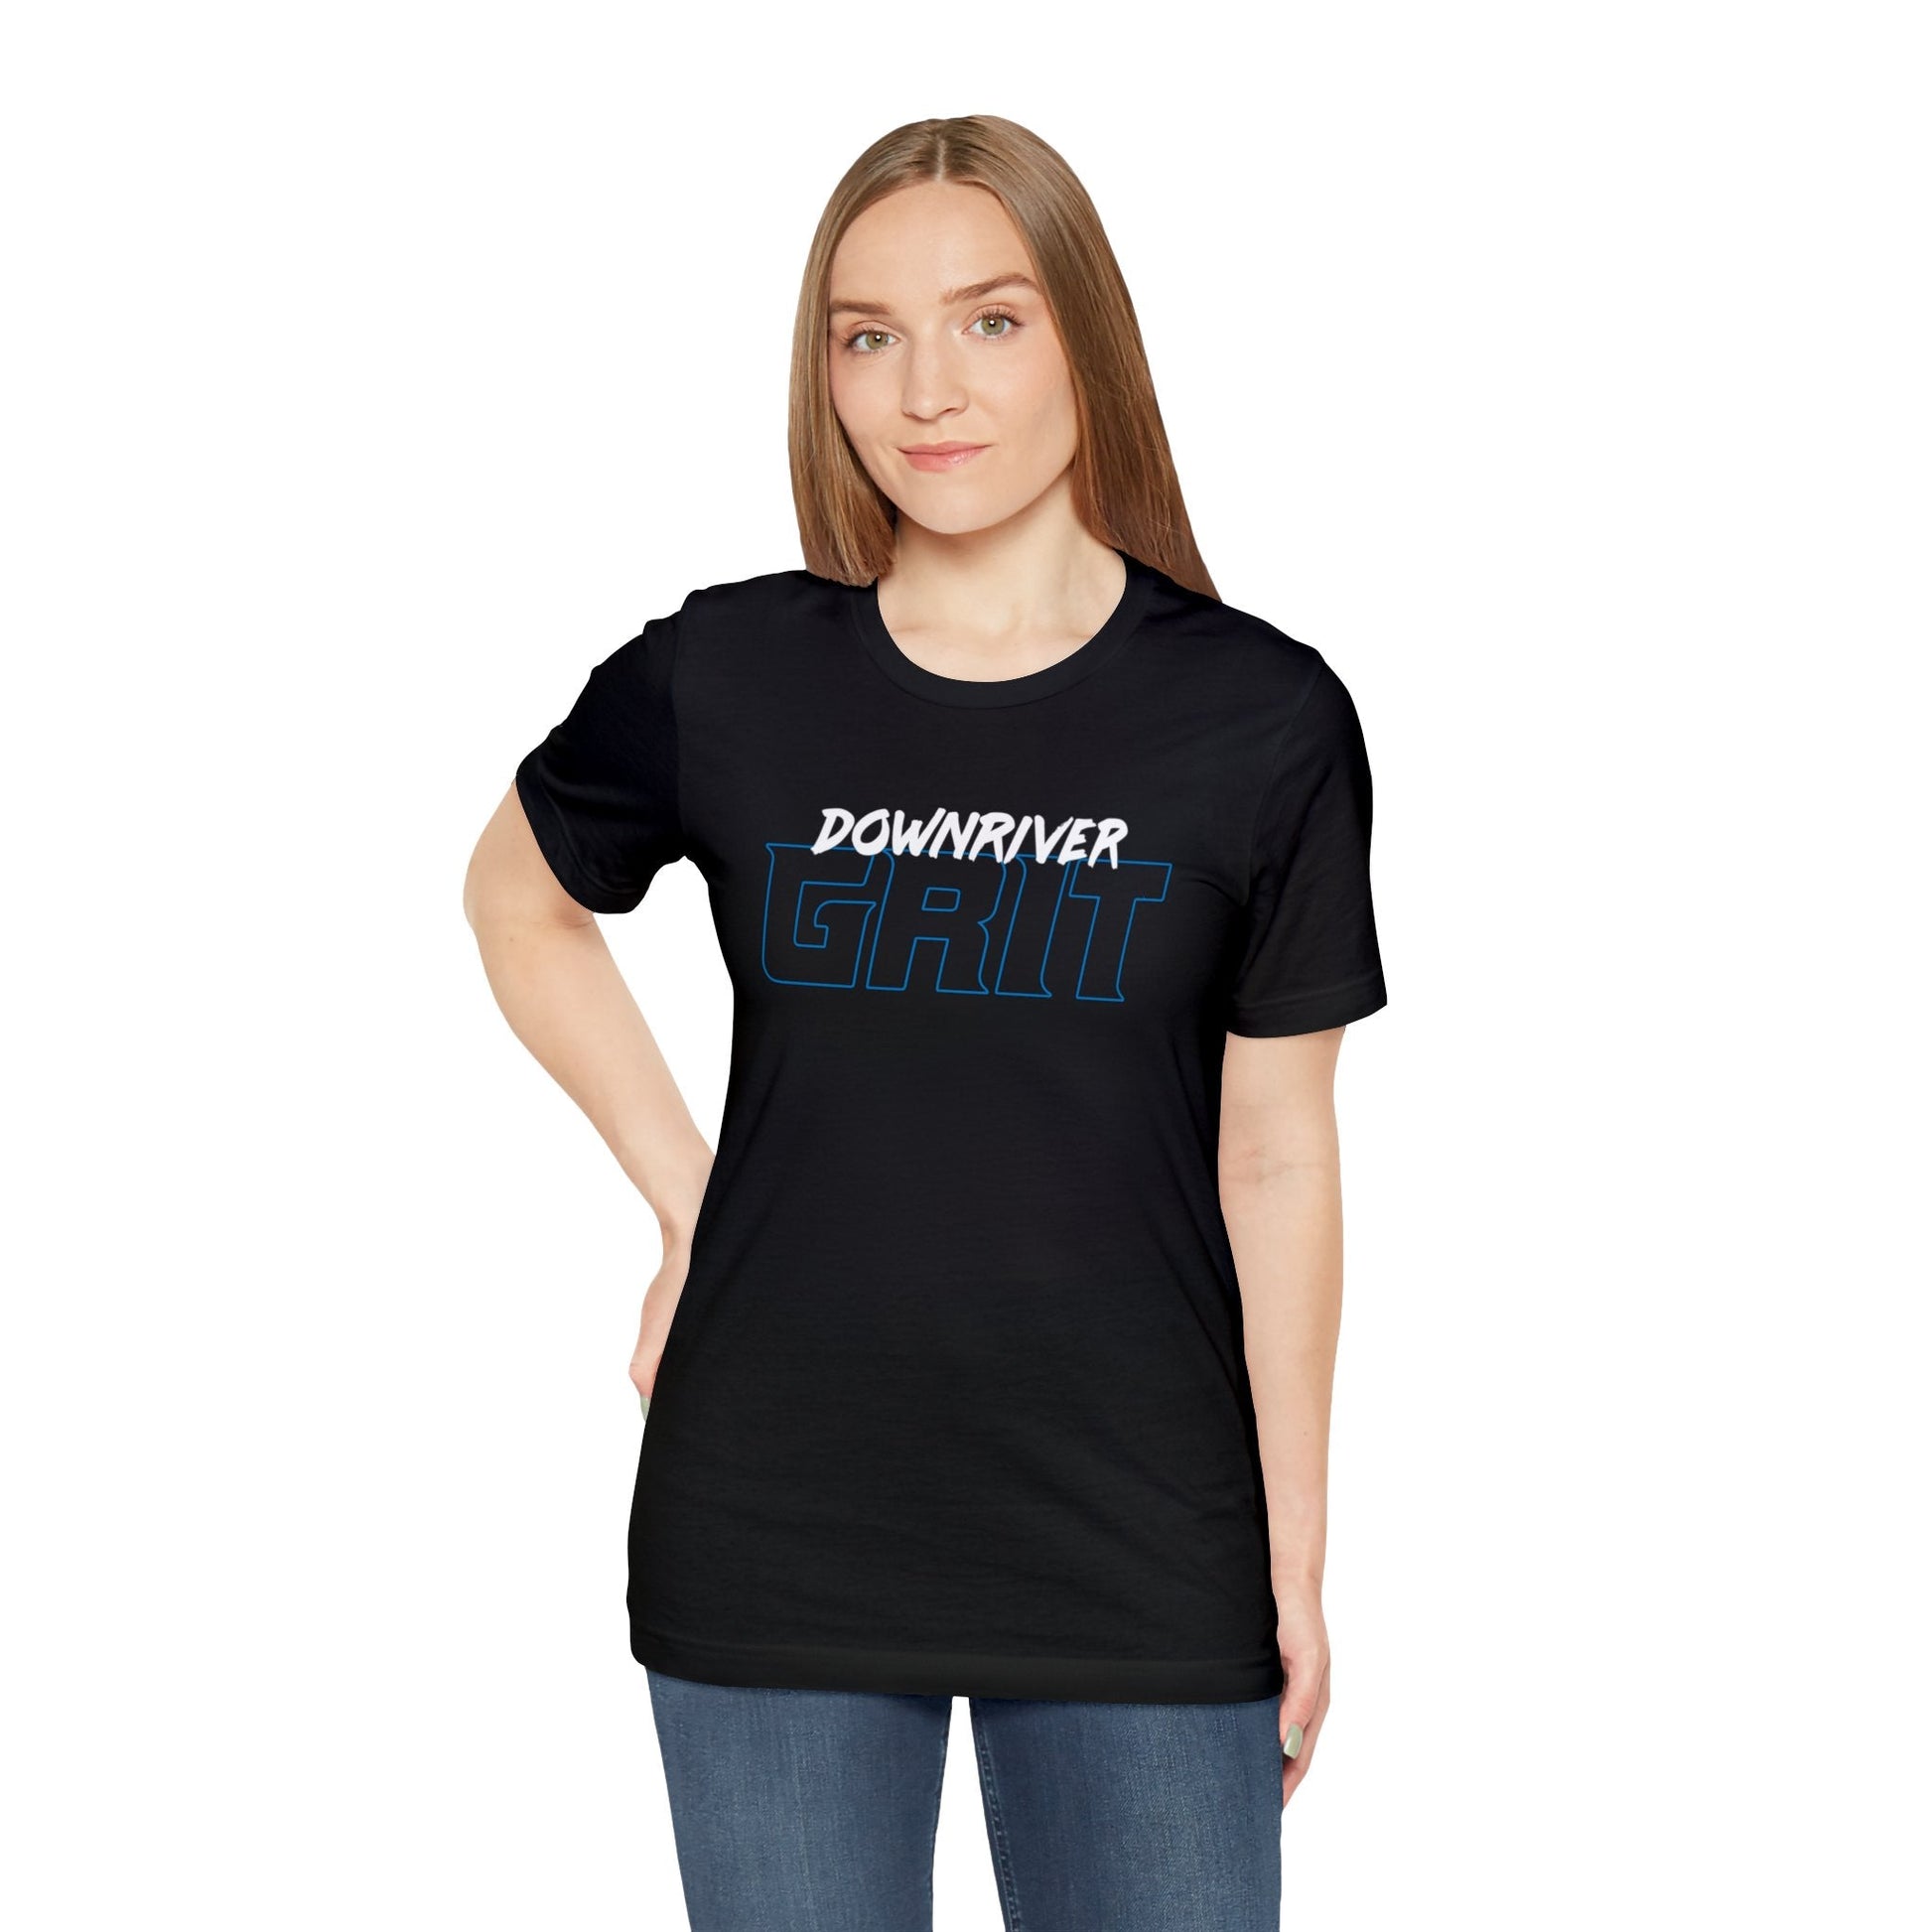 Downriver 23 Grit Football Soft Jersey T Shirt | Downriver Clothing Apparel | Detroit Michigan | Downriver World